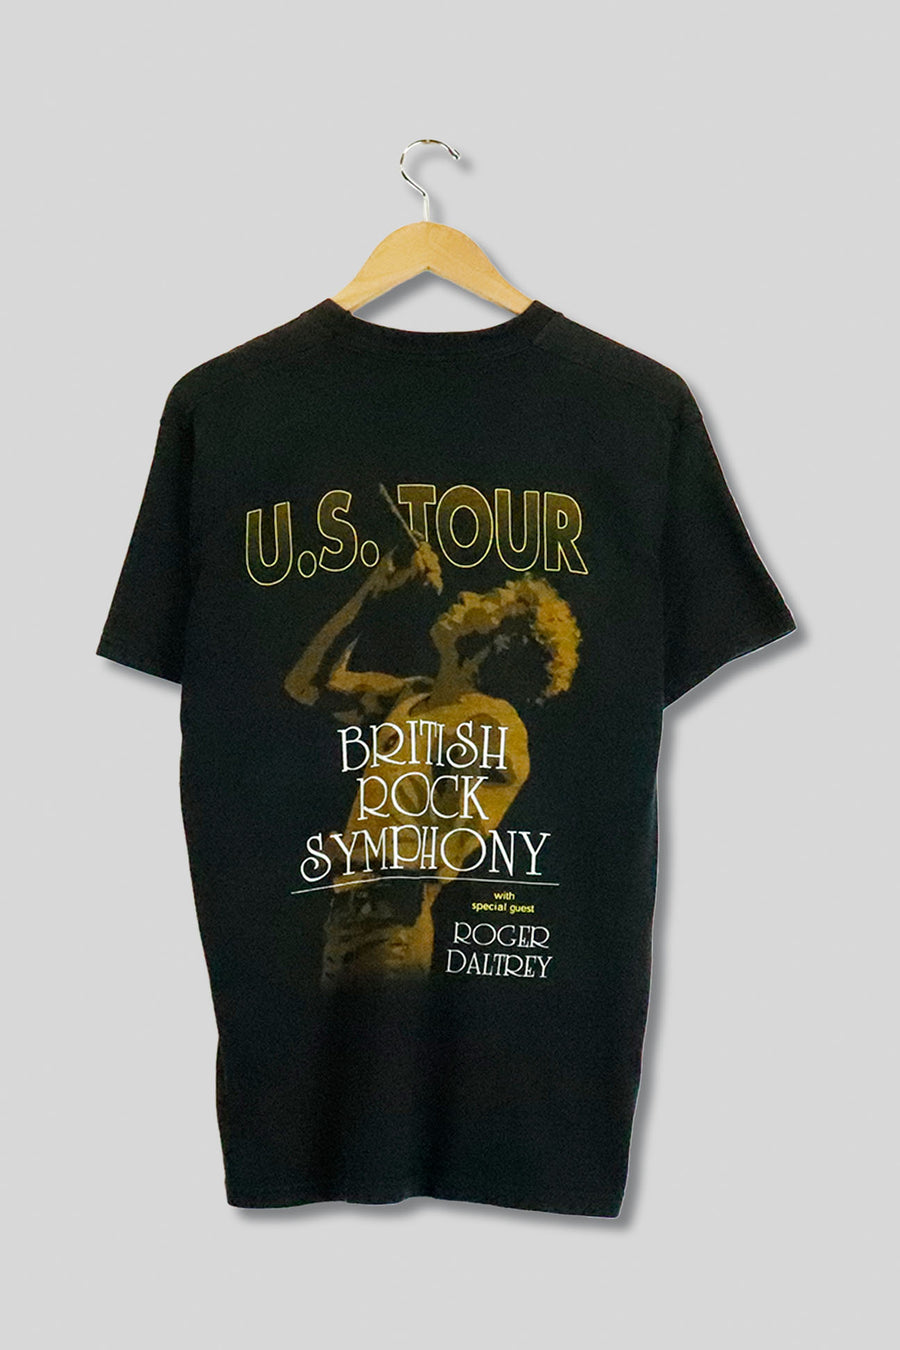 Vintage 1998 Rock British Symphony T Shirt Sz L